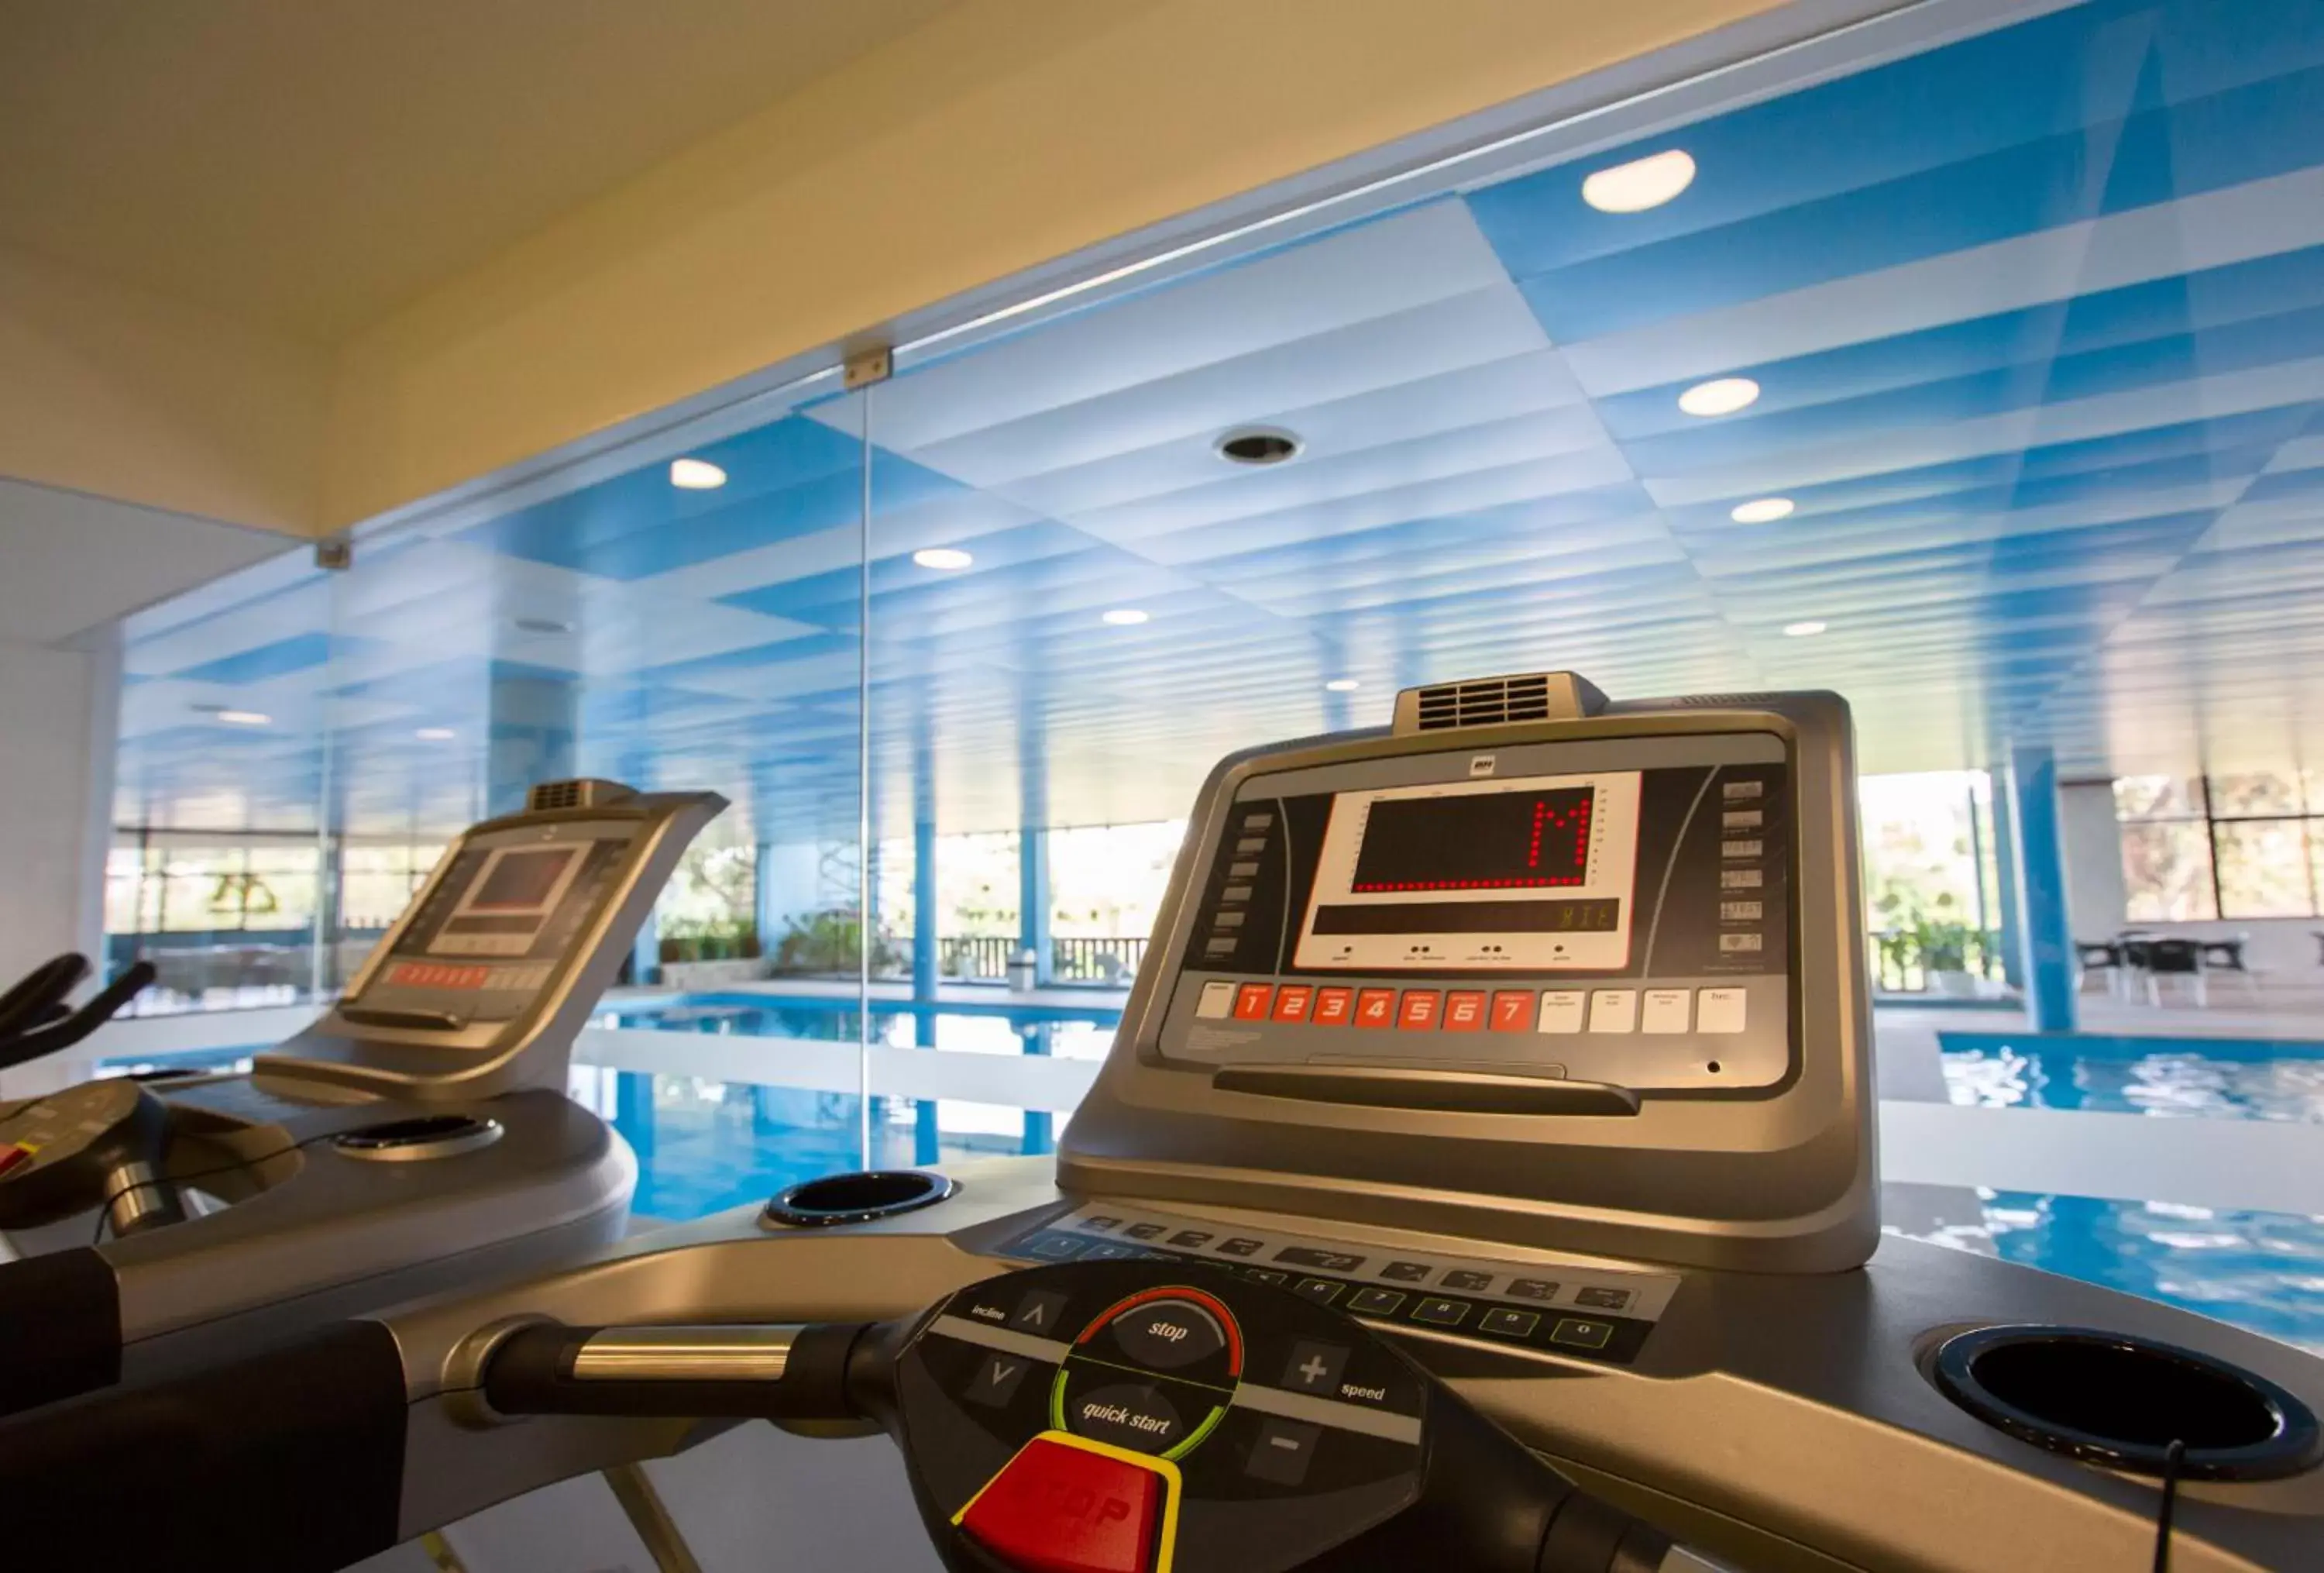 Fitness centre/facilities, Fitness Center/Facilities in Hotel Miracorgo